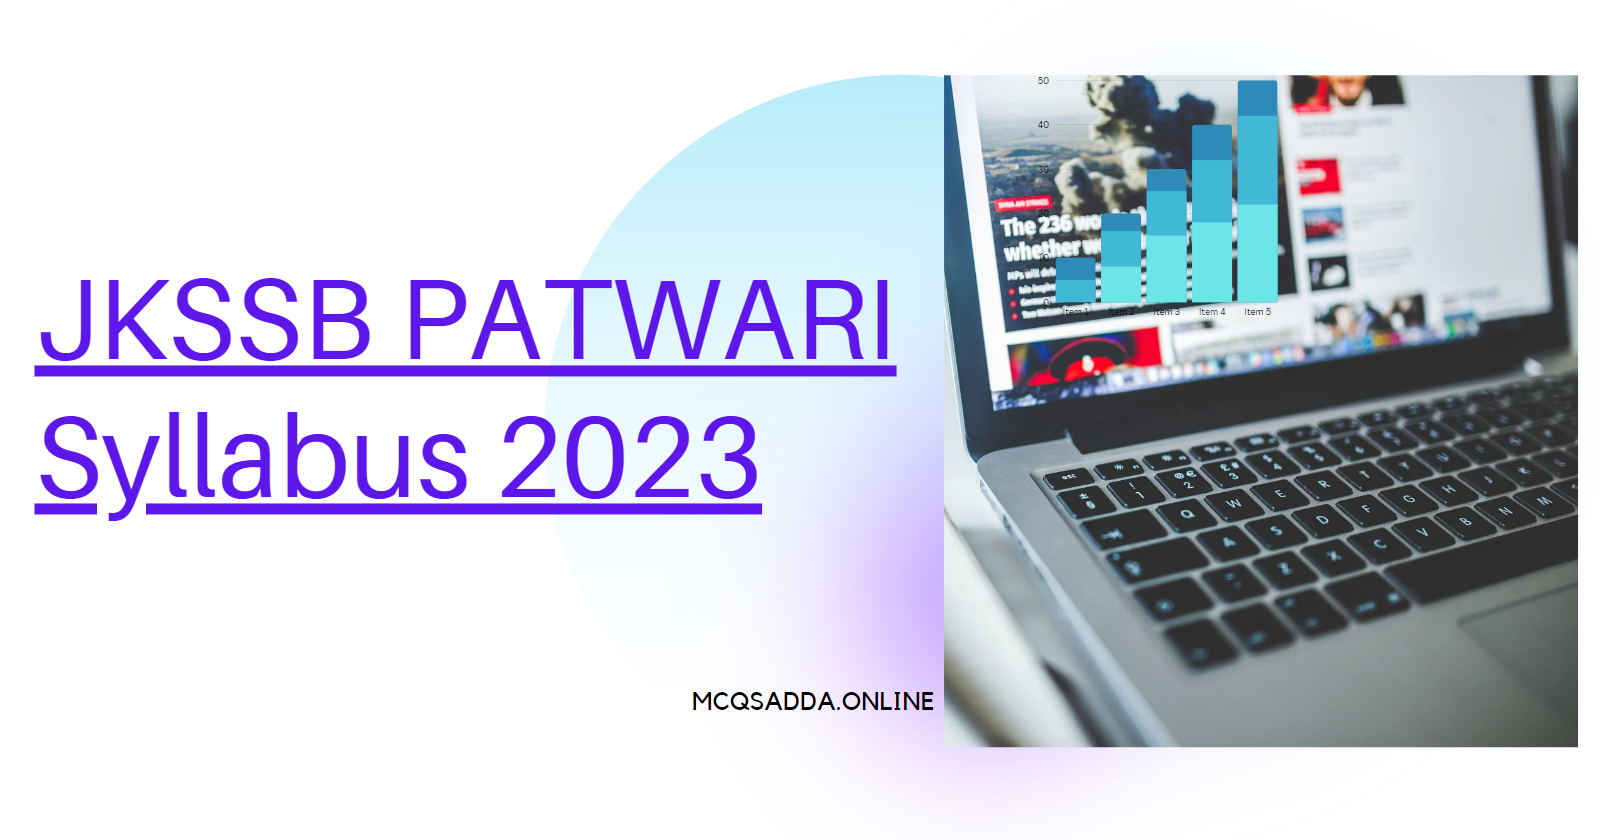 JKSSB Patwari Syllabus 2023.